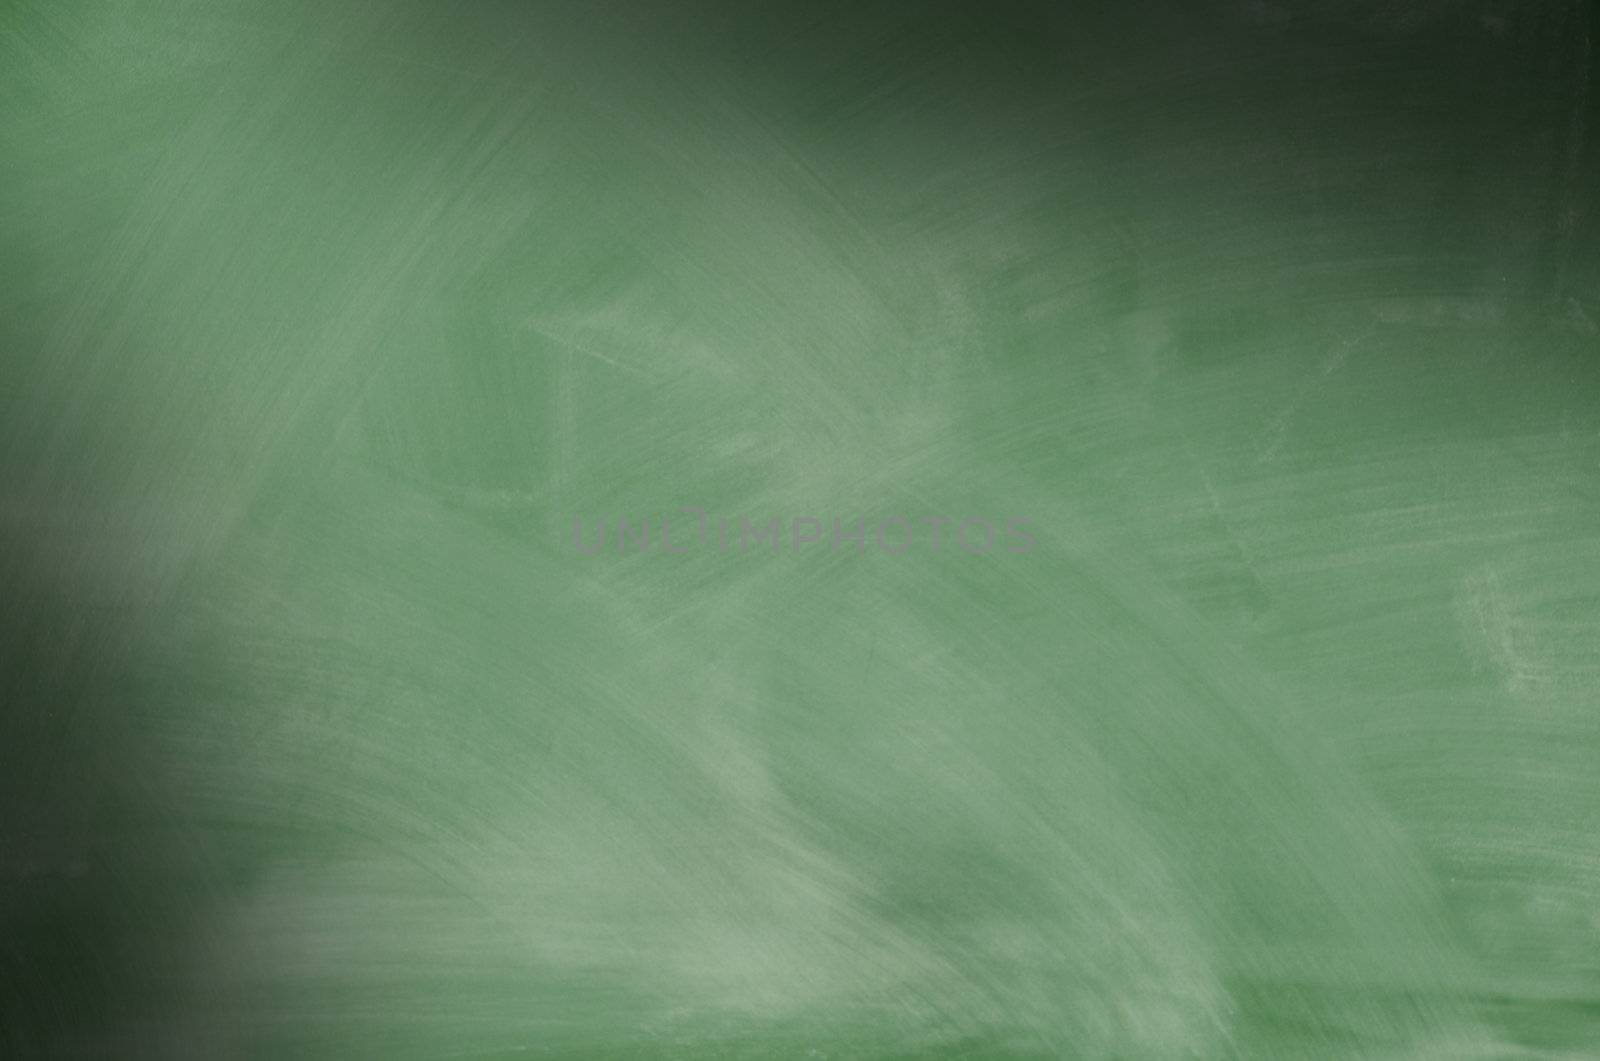 Green chalkboard with smeared chalk eraser marks lit diagonally